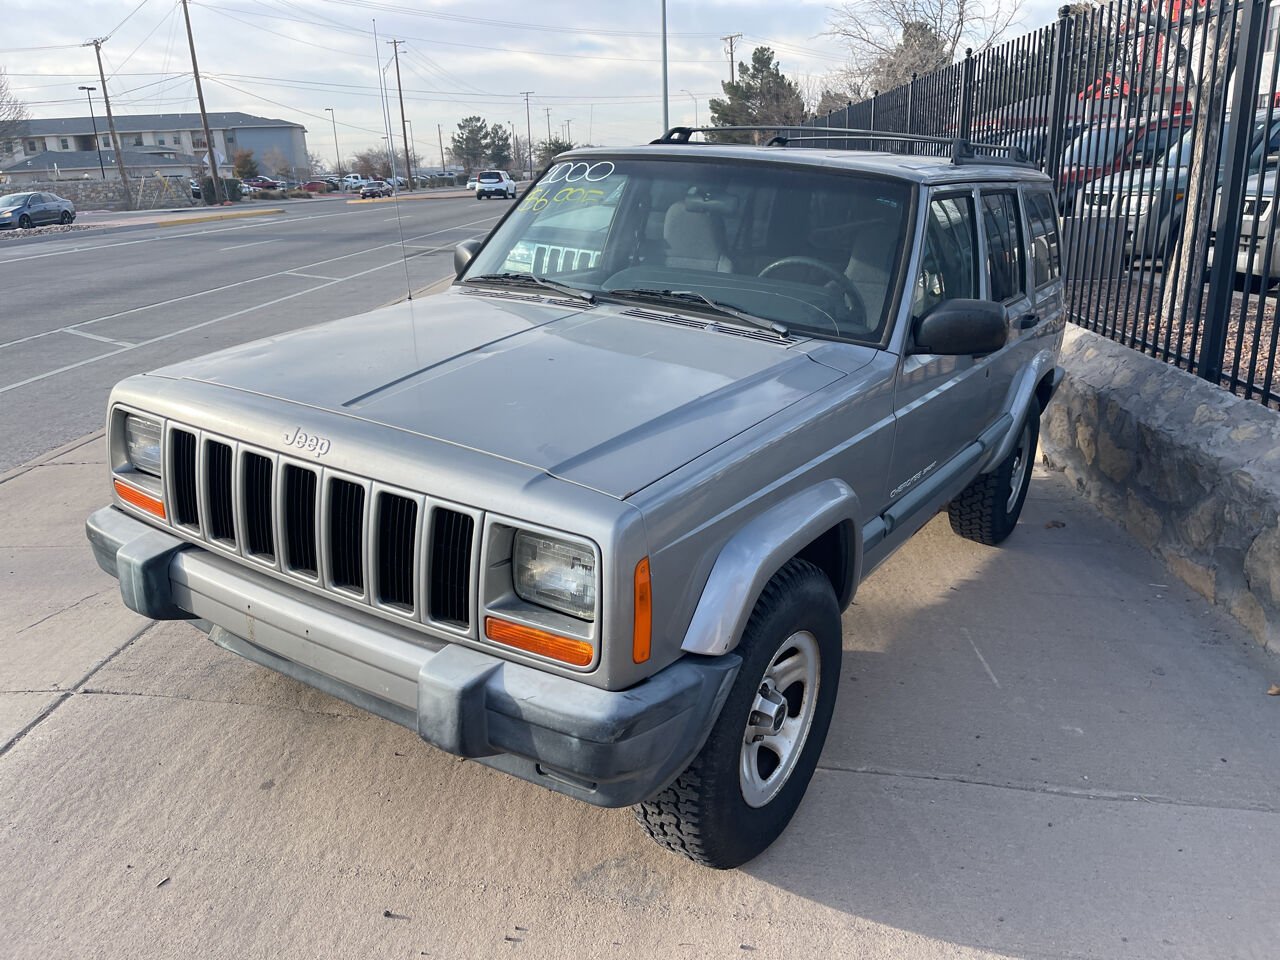 2000 Jeep Cherokee For Sale - Carsforsale.com®